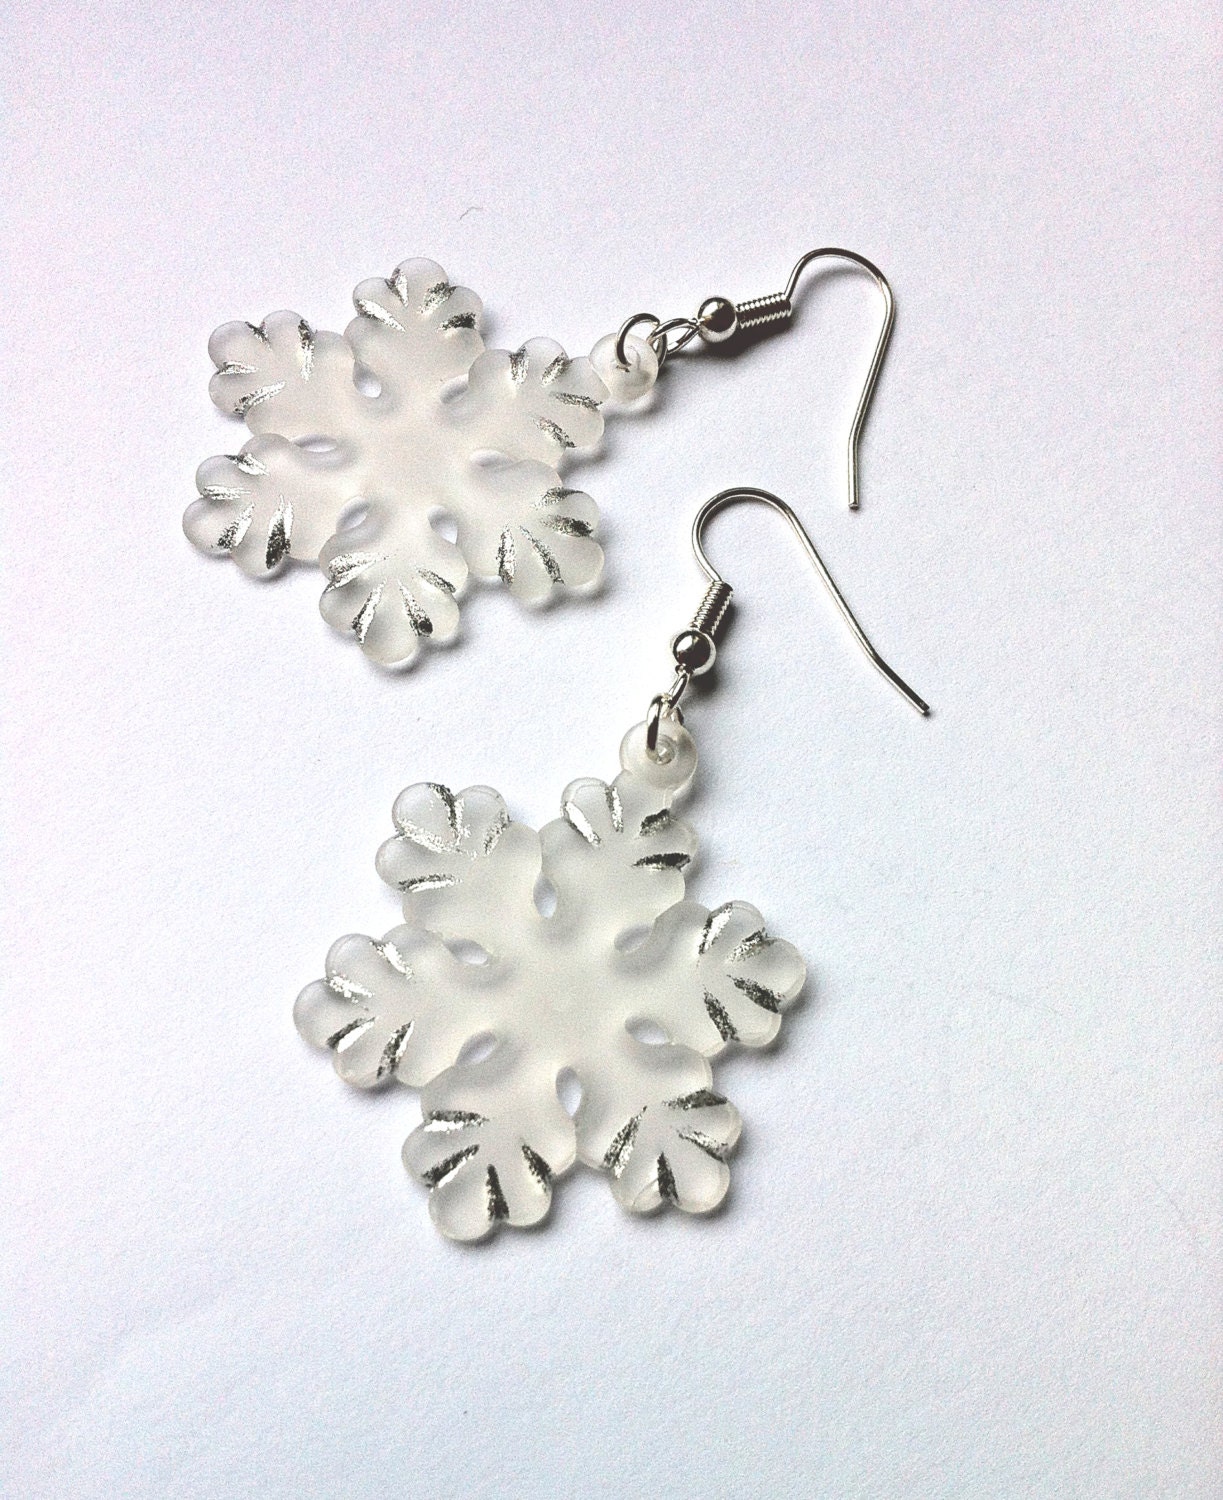 SNOWFLAKES Earrings - Dangle earrings with snowflakes - Christmas jewelry gift idea - AChicFairytale